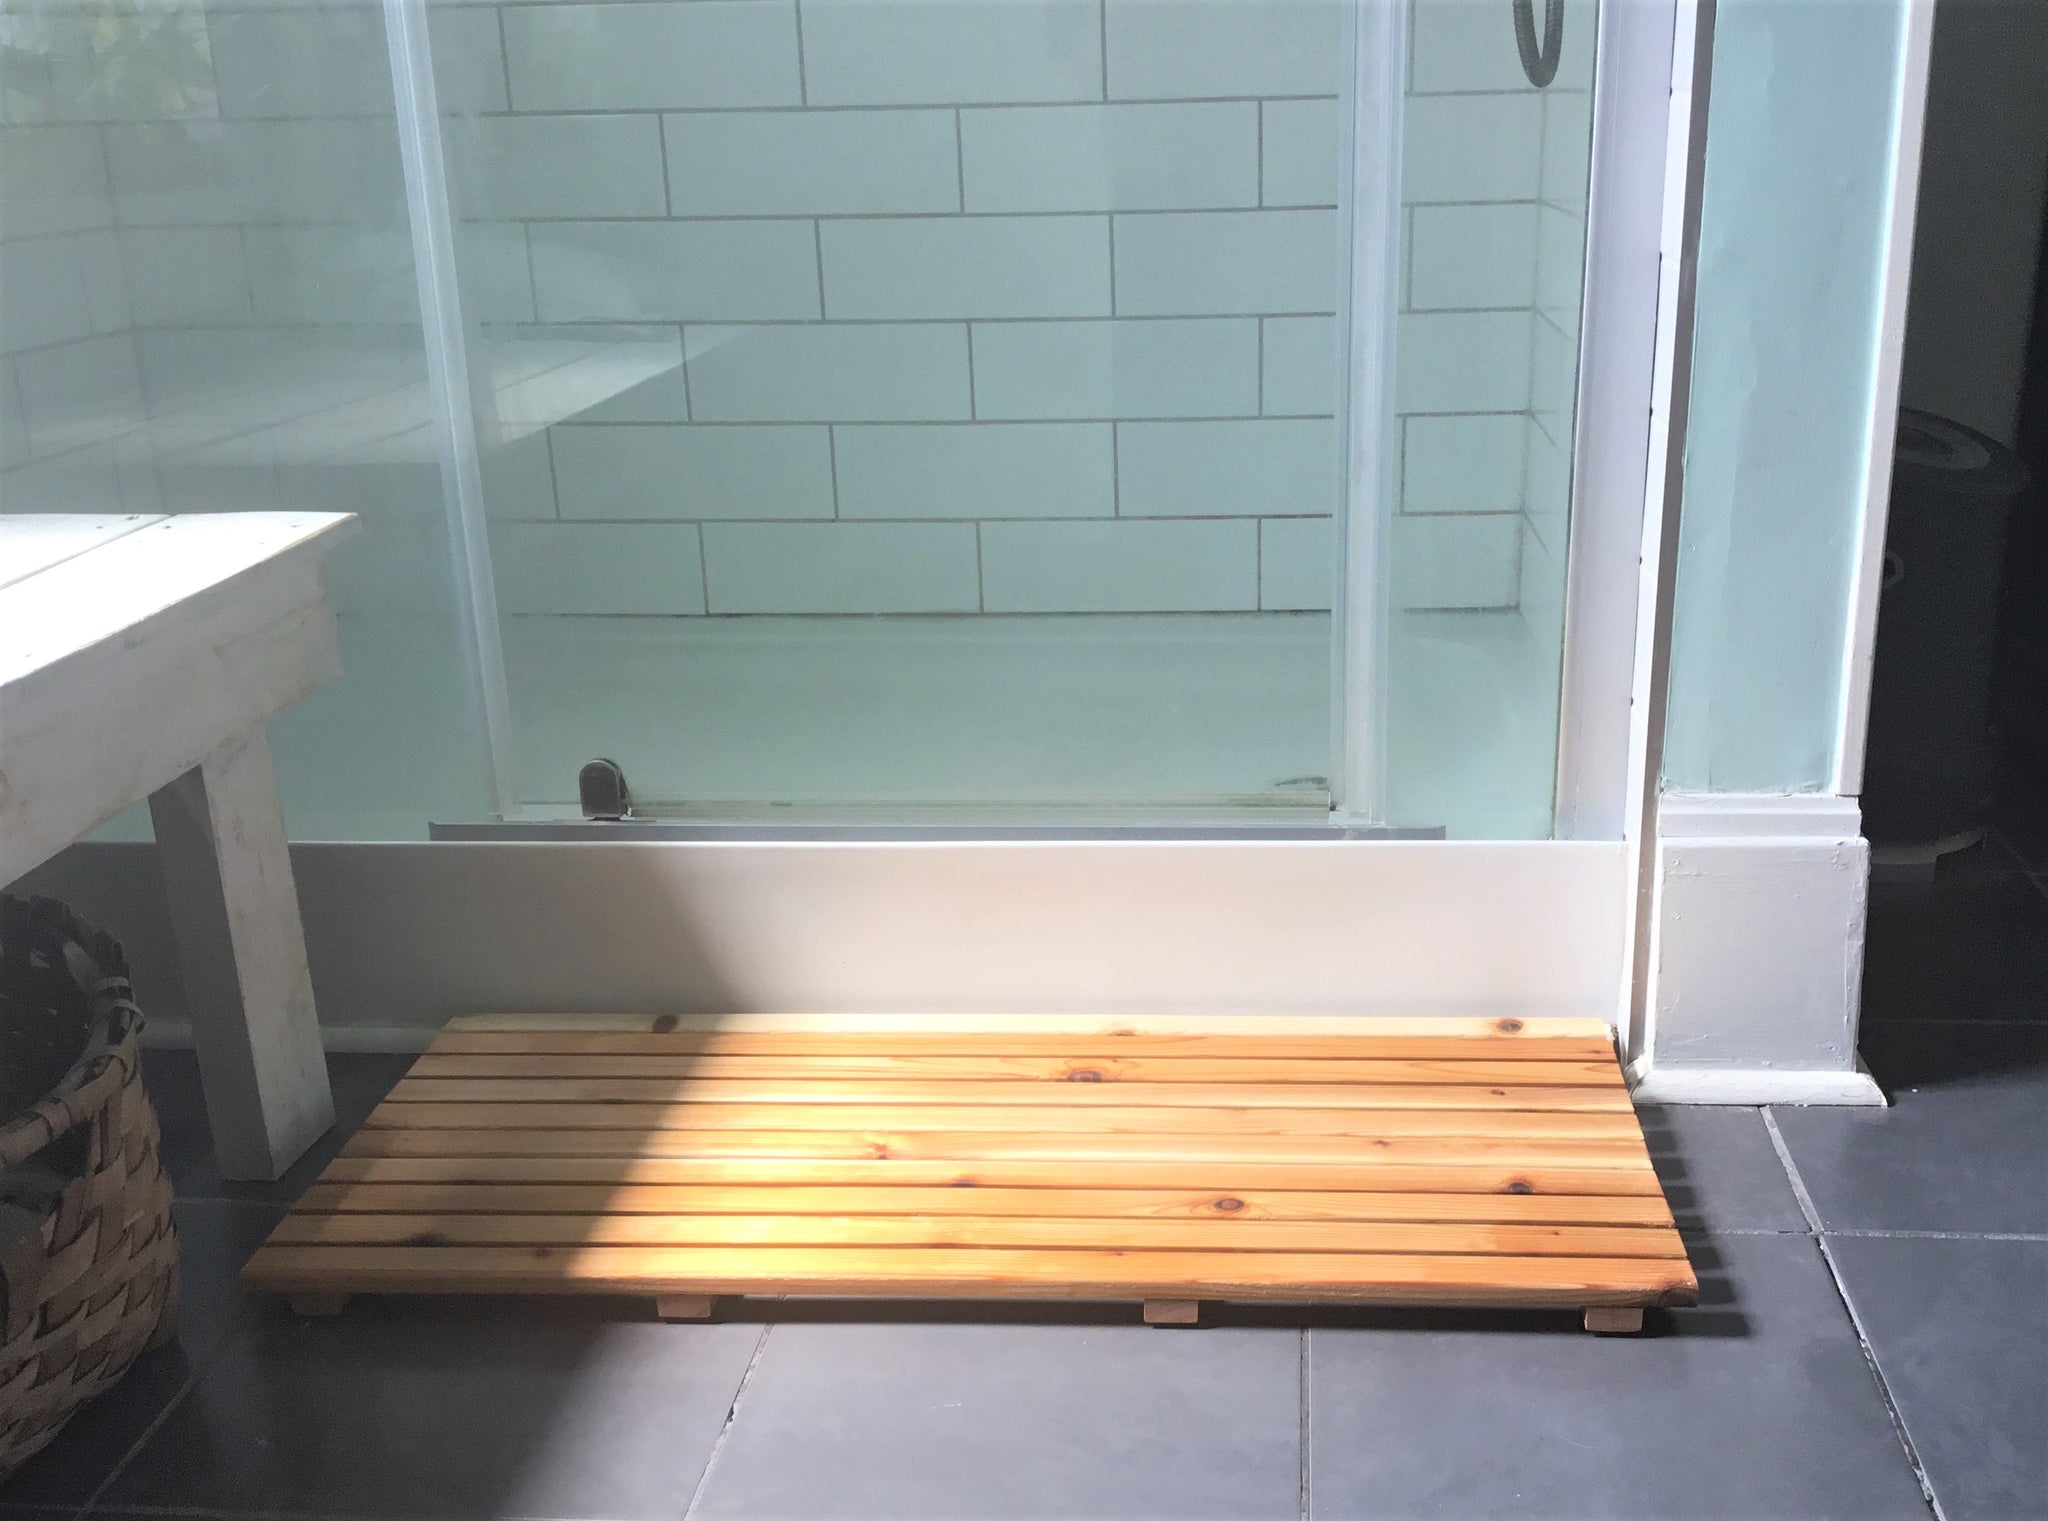 Cedar Bath or Shower Mat – Sharon M for the Home